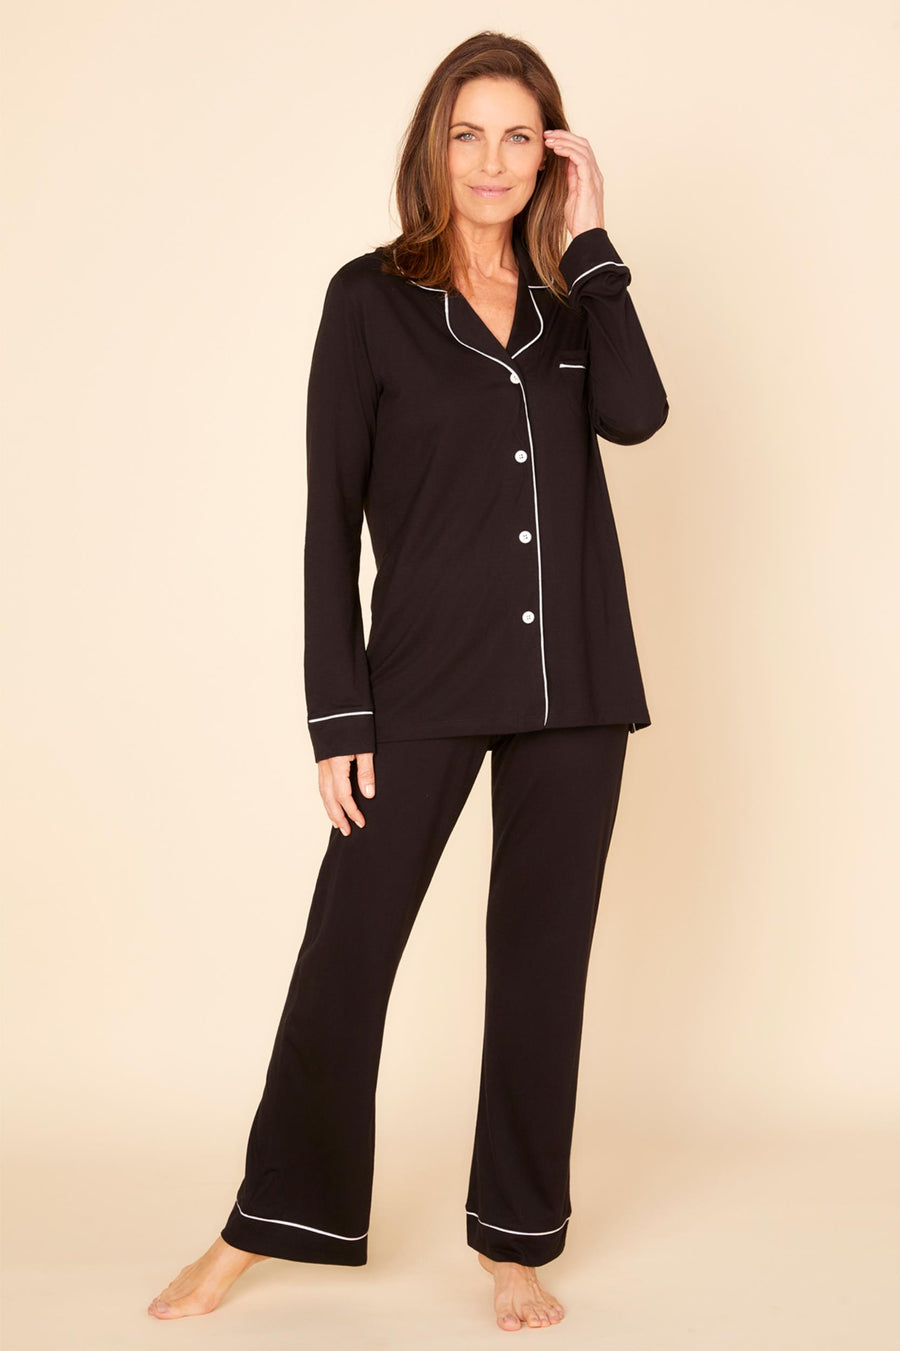 Black Set - Bella Long Sleeve Top & Pant Pajama Set